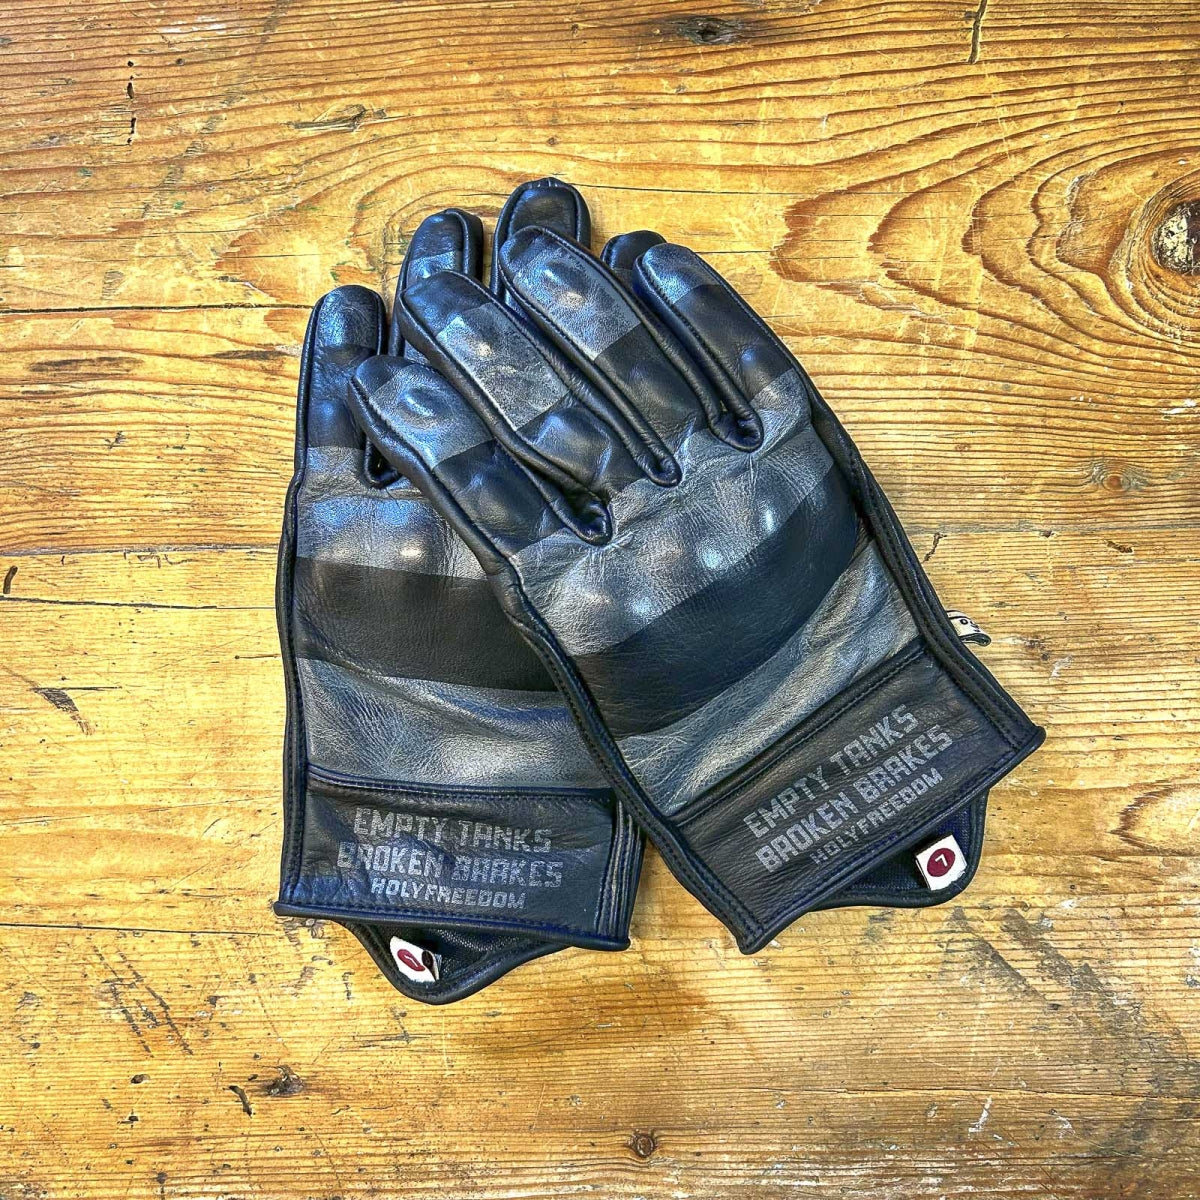 Holyfreedom Dalton Motorcycle Gloves - Grey